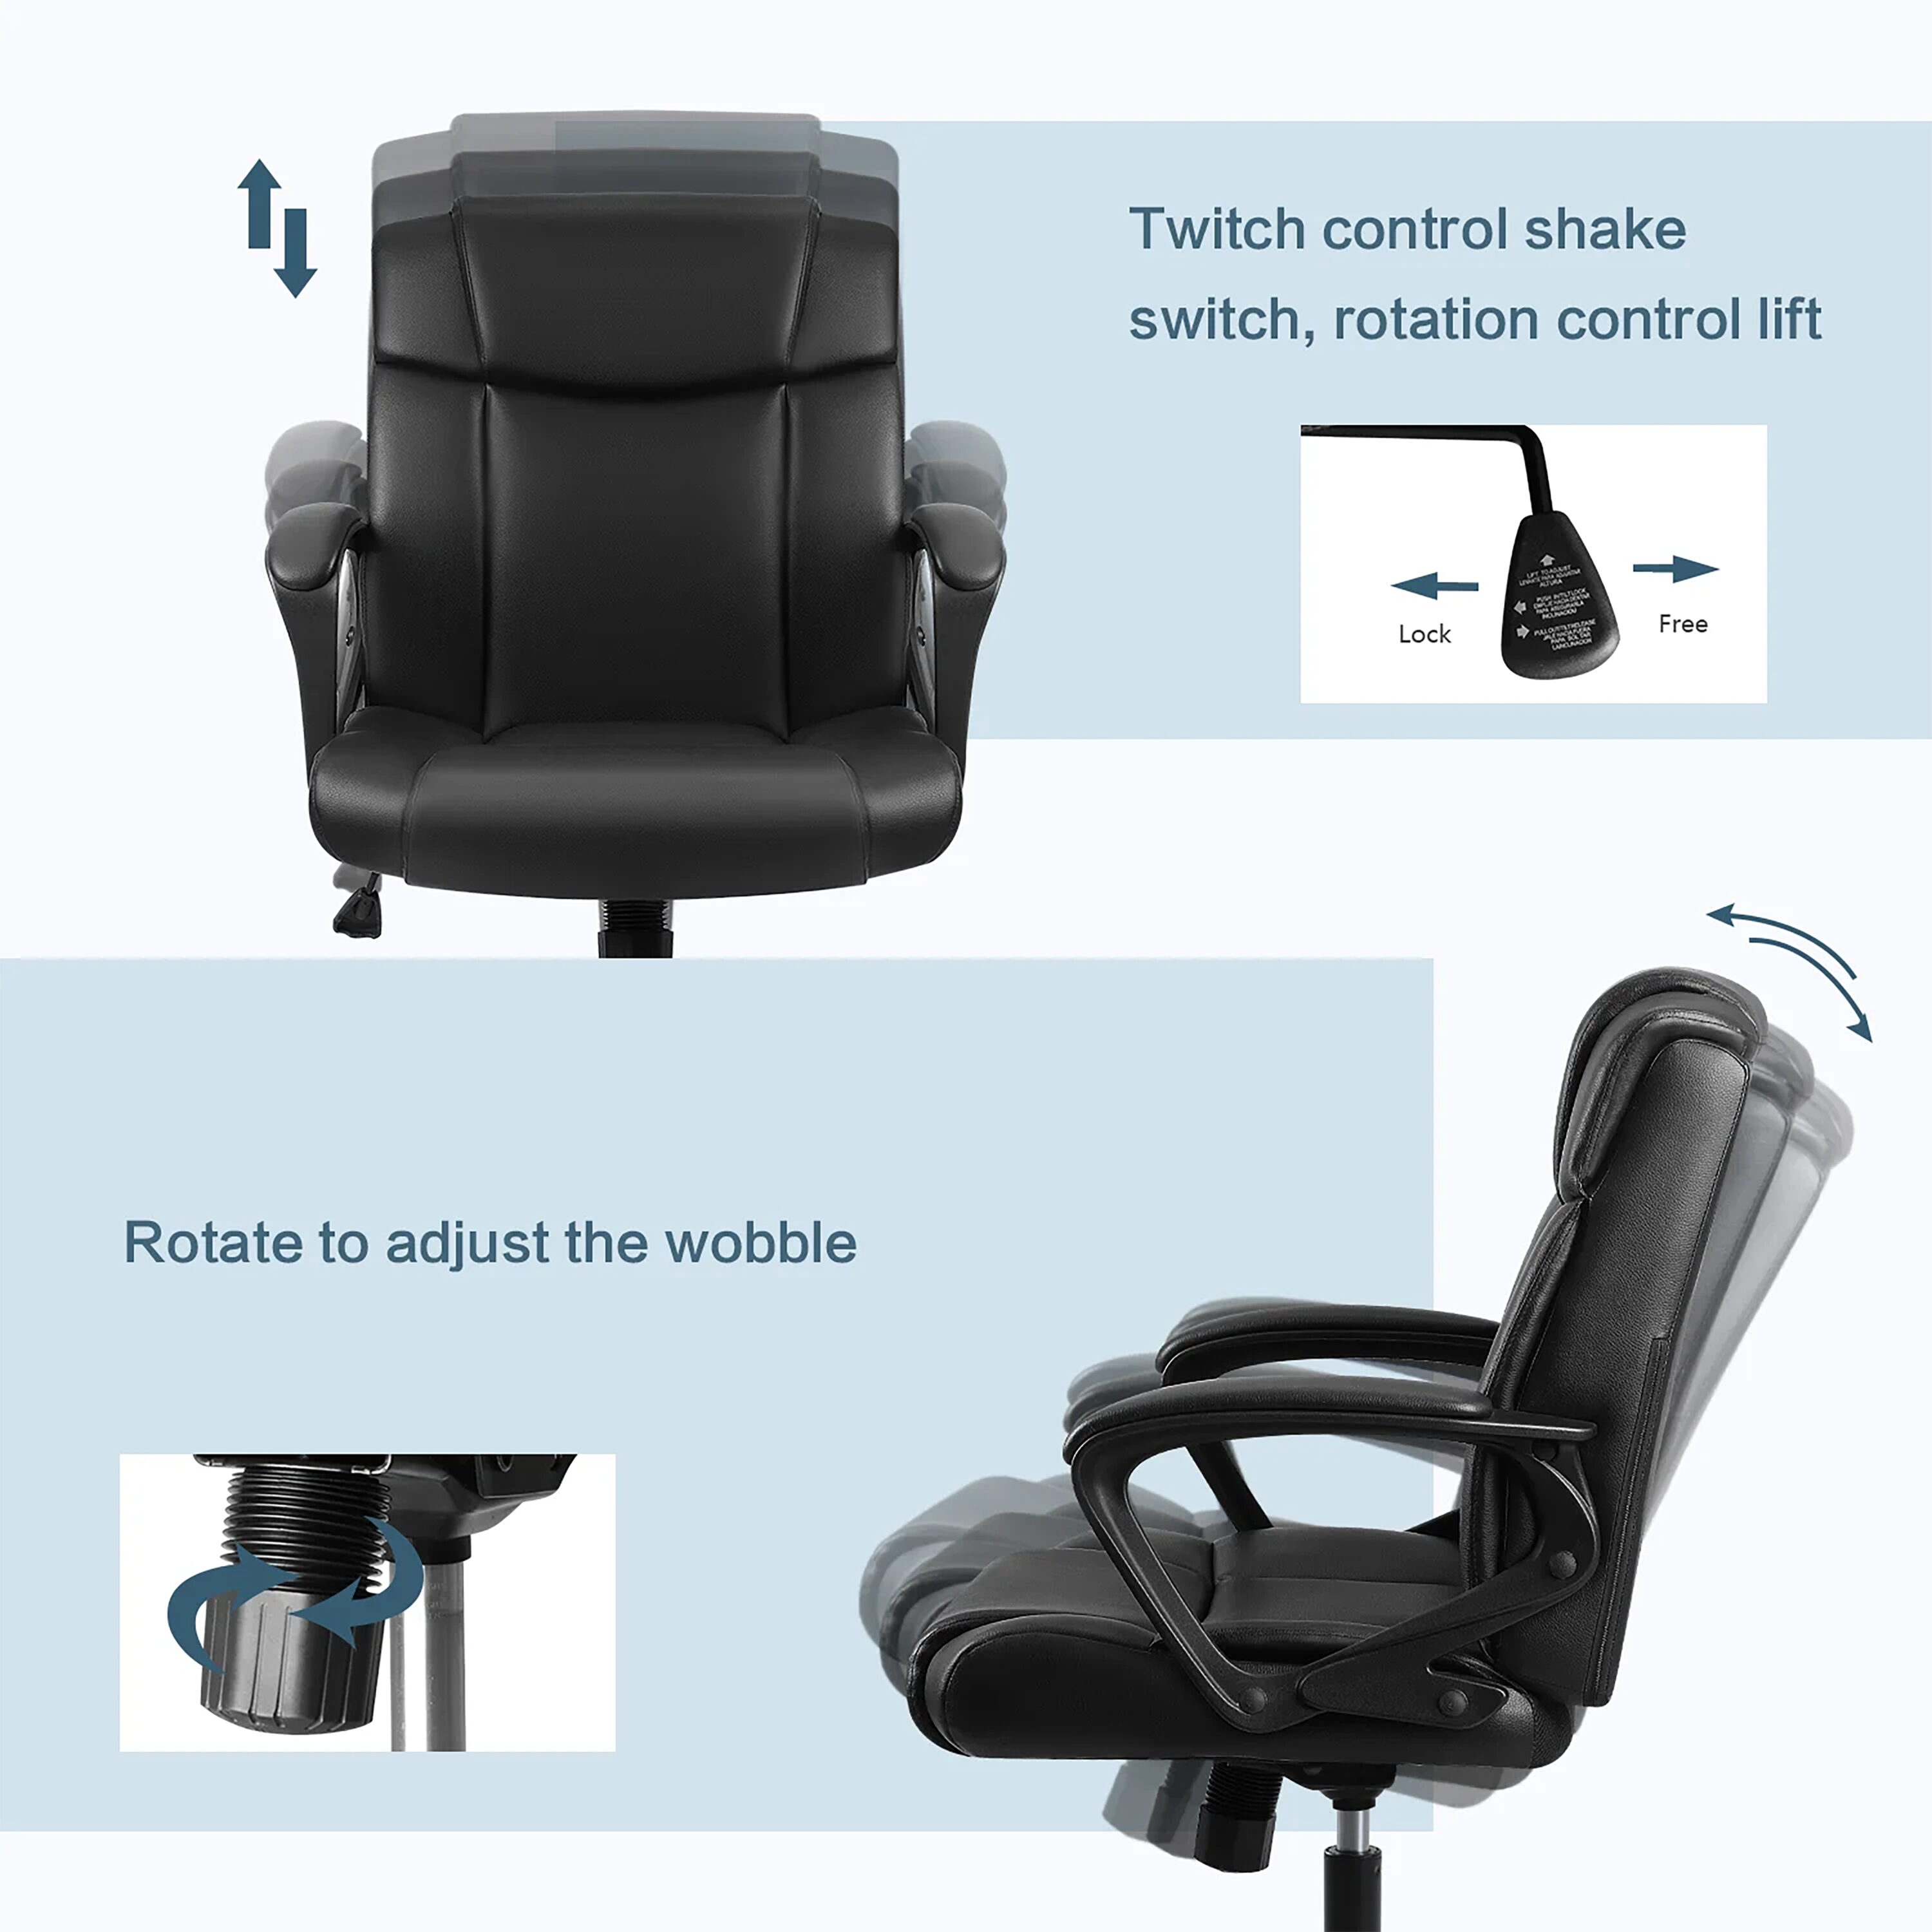 Ovios Krellack Light Brown Contemporary Ergonomic Adjustable Height Swivel  Faux Leather Desk Chair